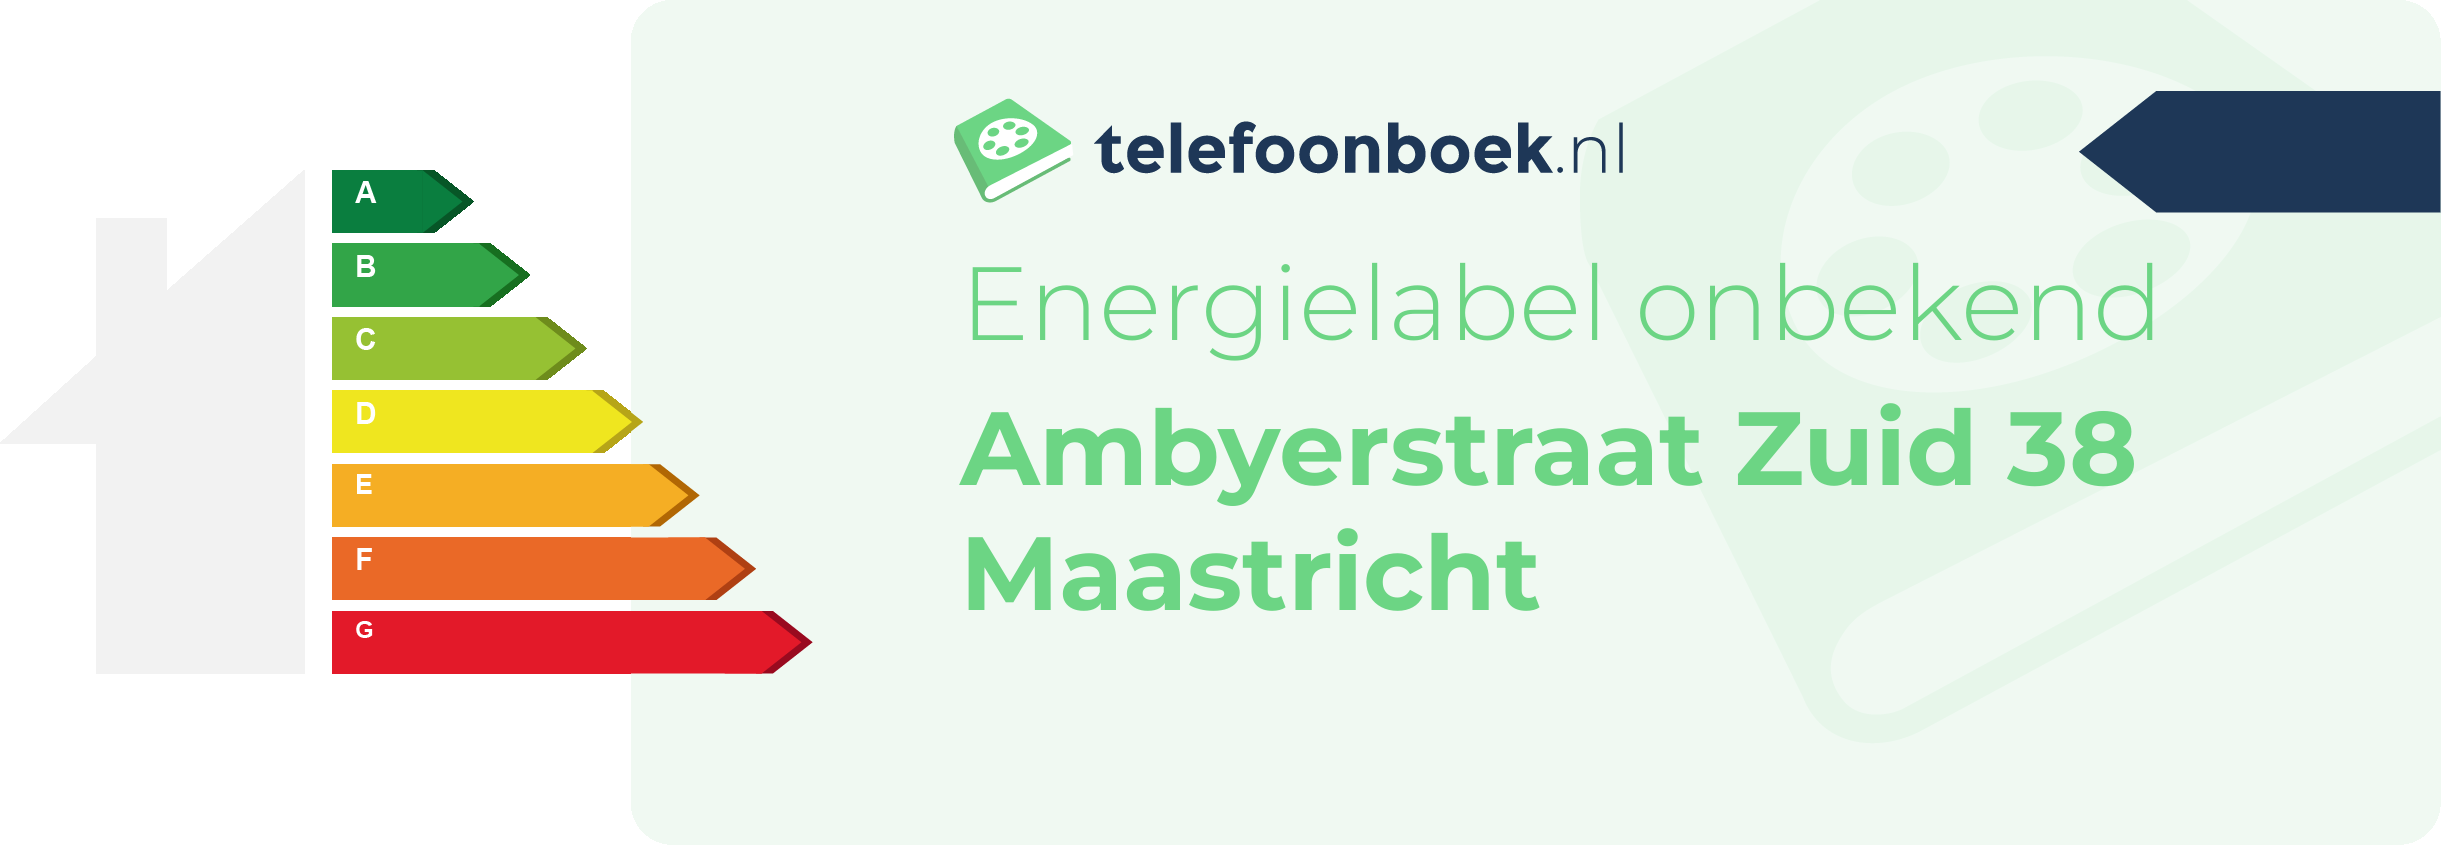 Energielabel Ambyerstraat Zuid 38 Maastricht